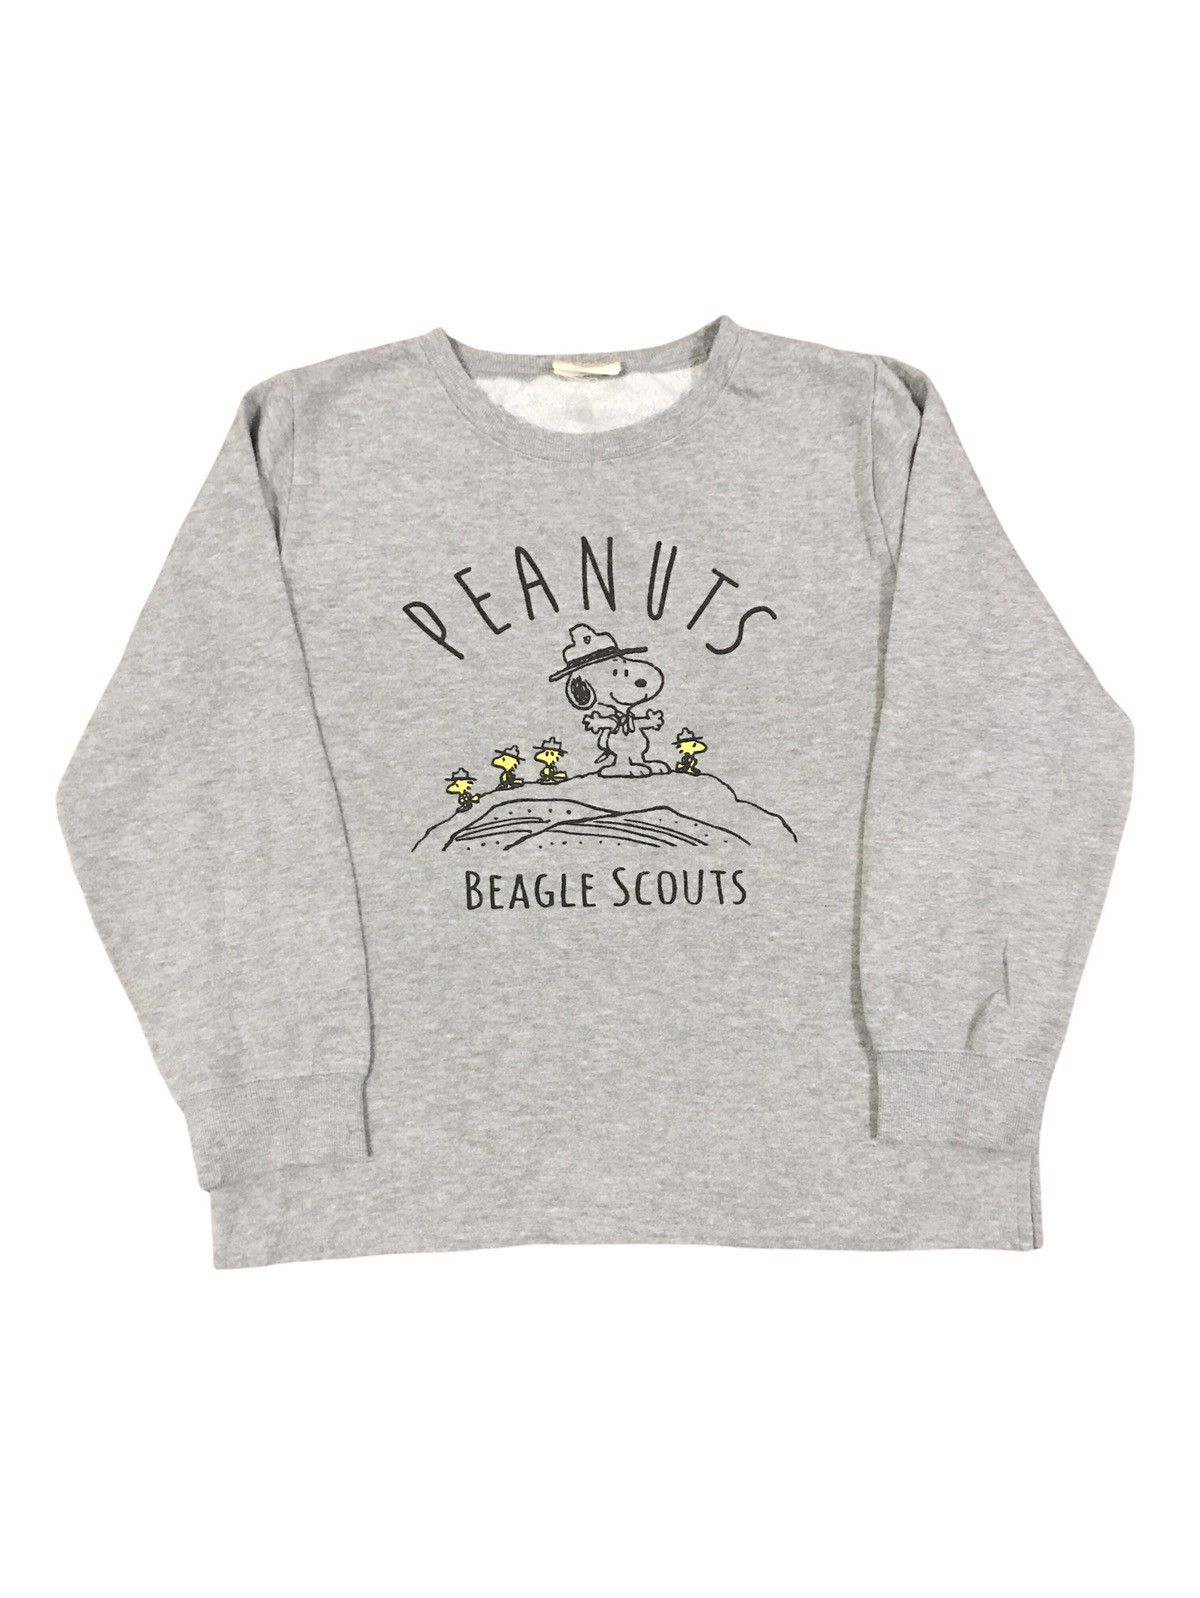 Peanuts Vintage Peanuts Sweatshirt Size US S / EU 44-46 / 1 - 1 Preview